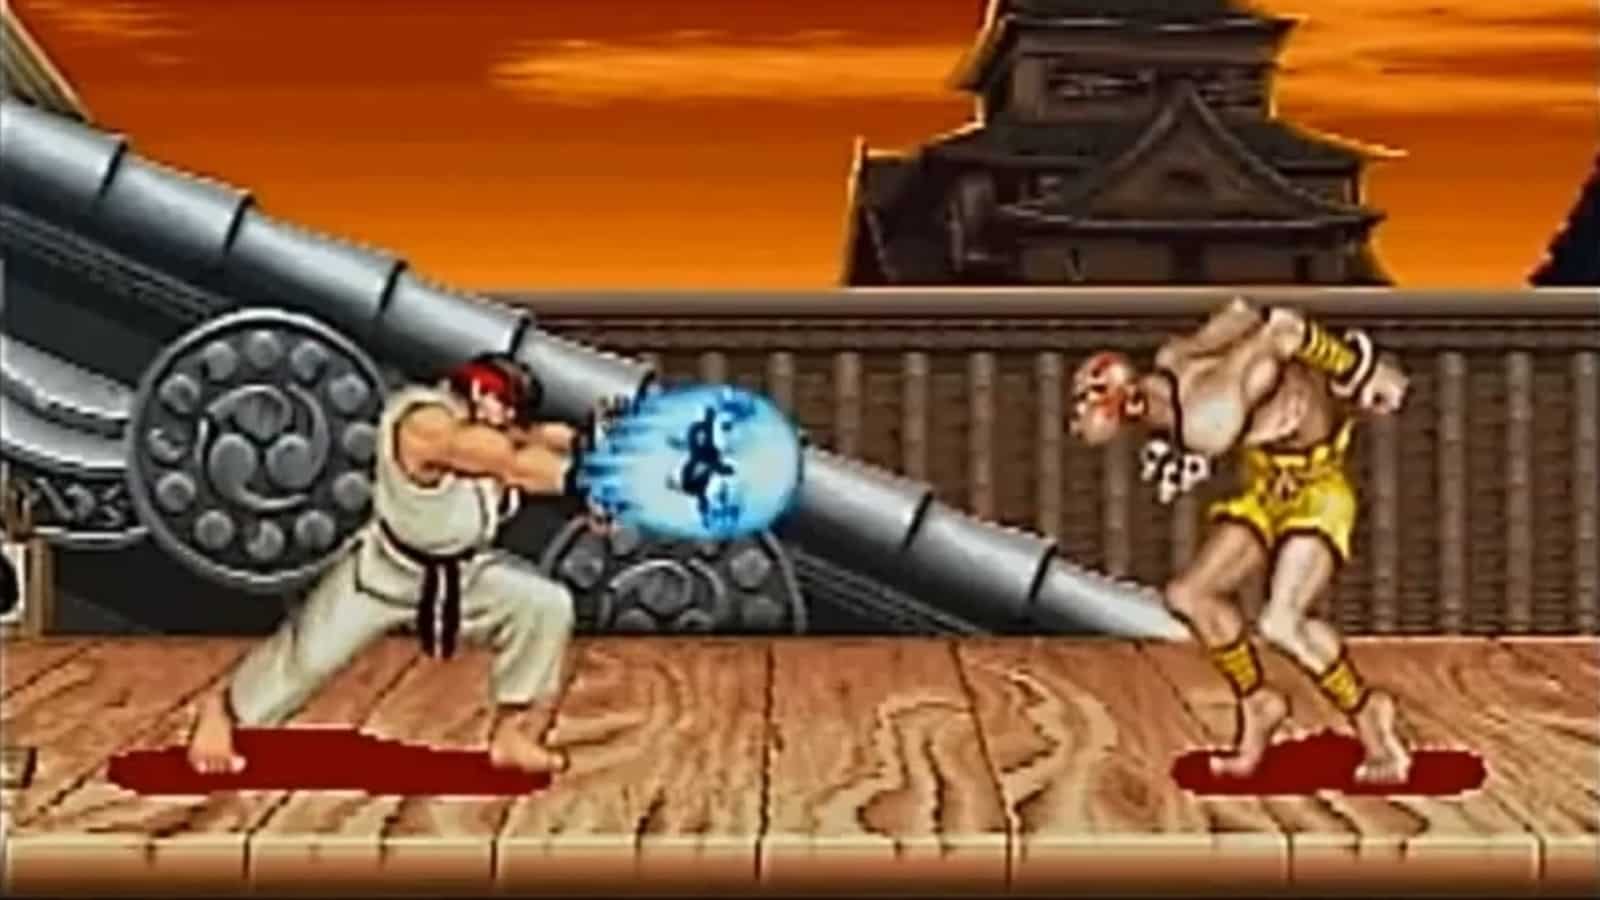 Street Fighter V PlayStation Store Image Provides More Season 2